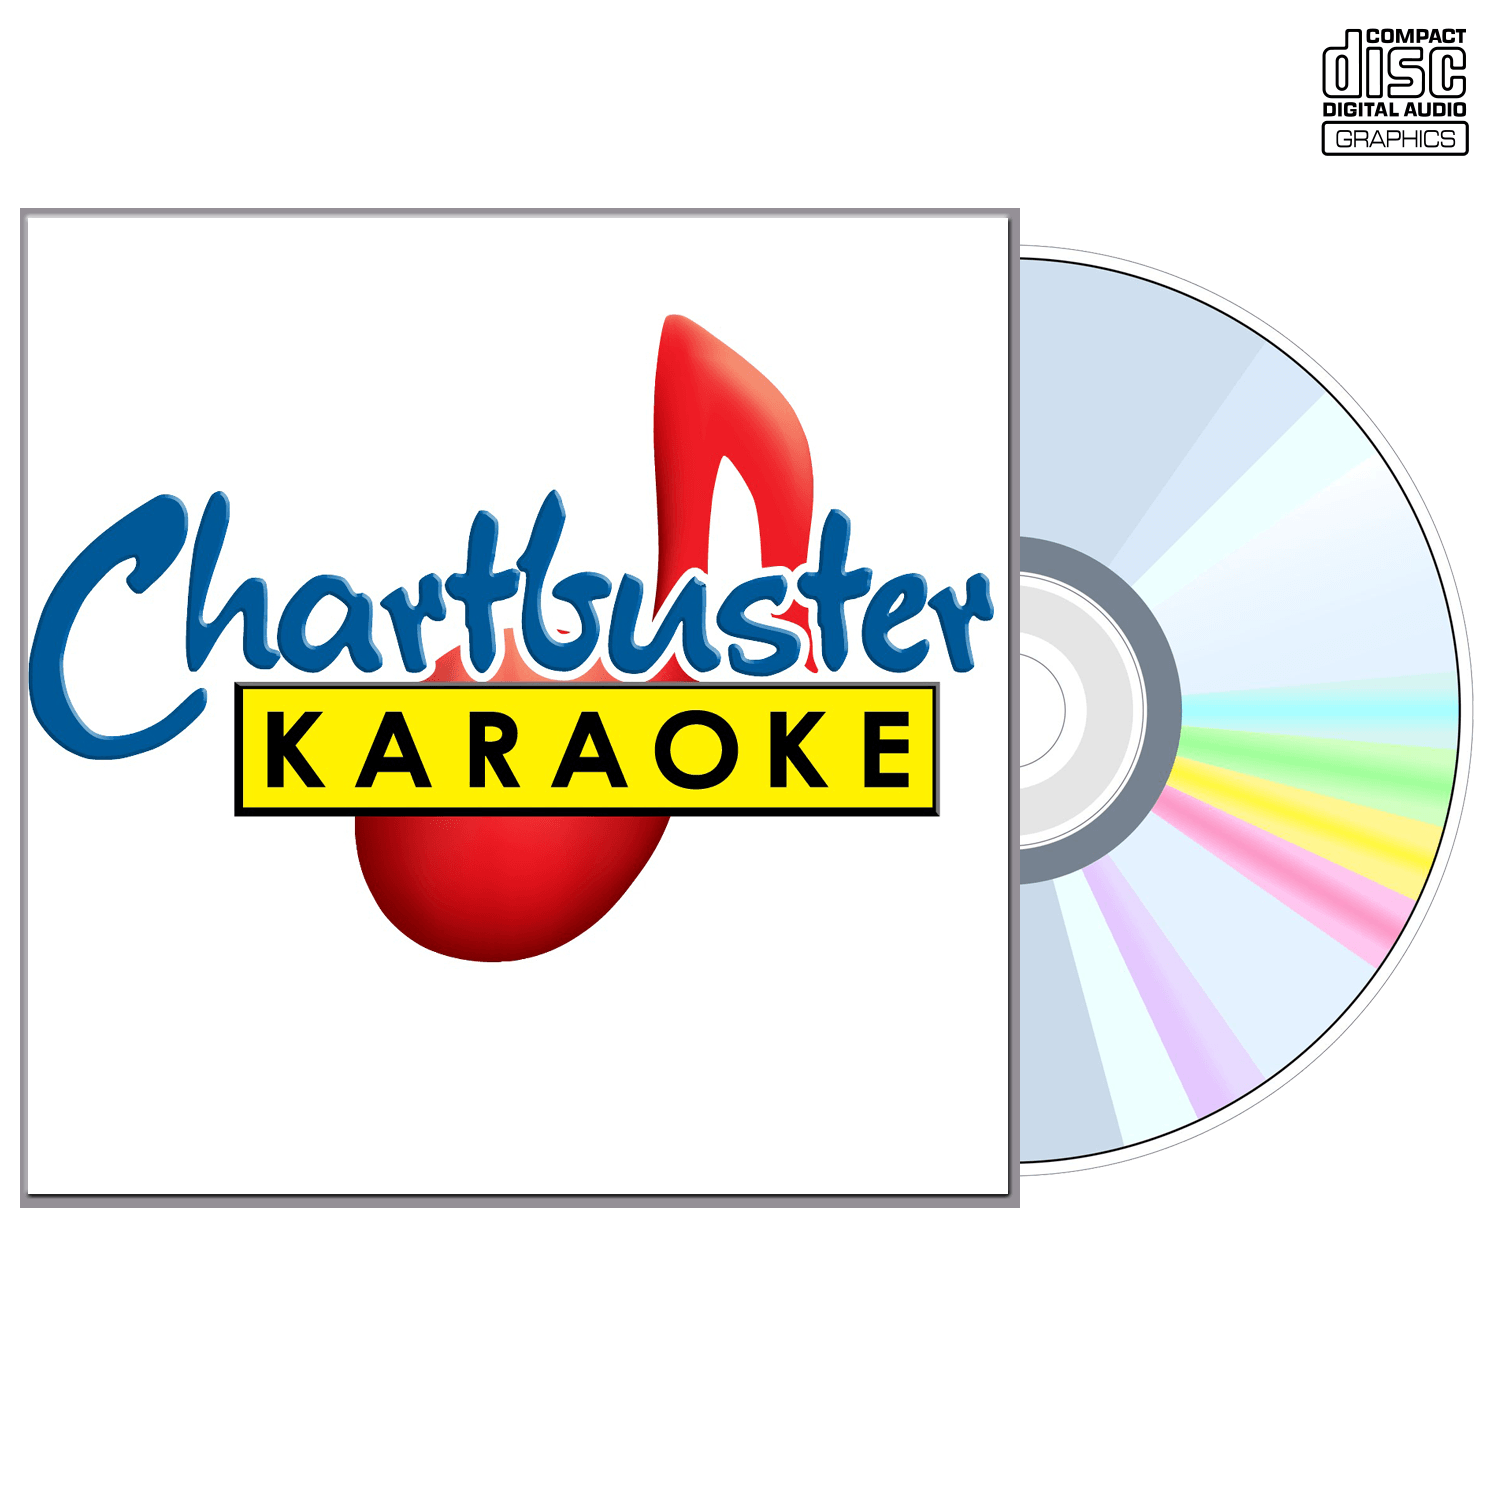 70's Collection Vol 09 - CD+G - Chartbuster Karaoke - Karaoke Home Entertainment